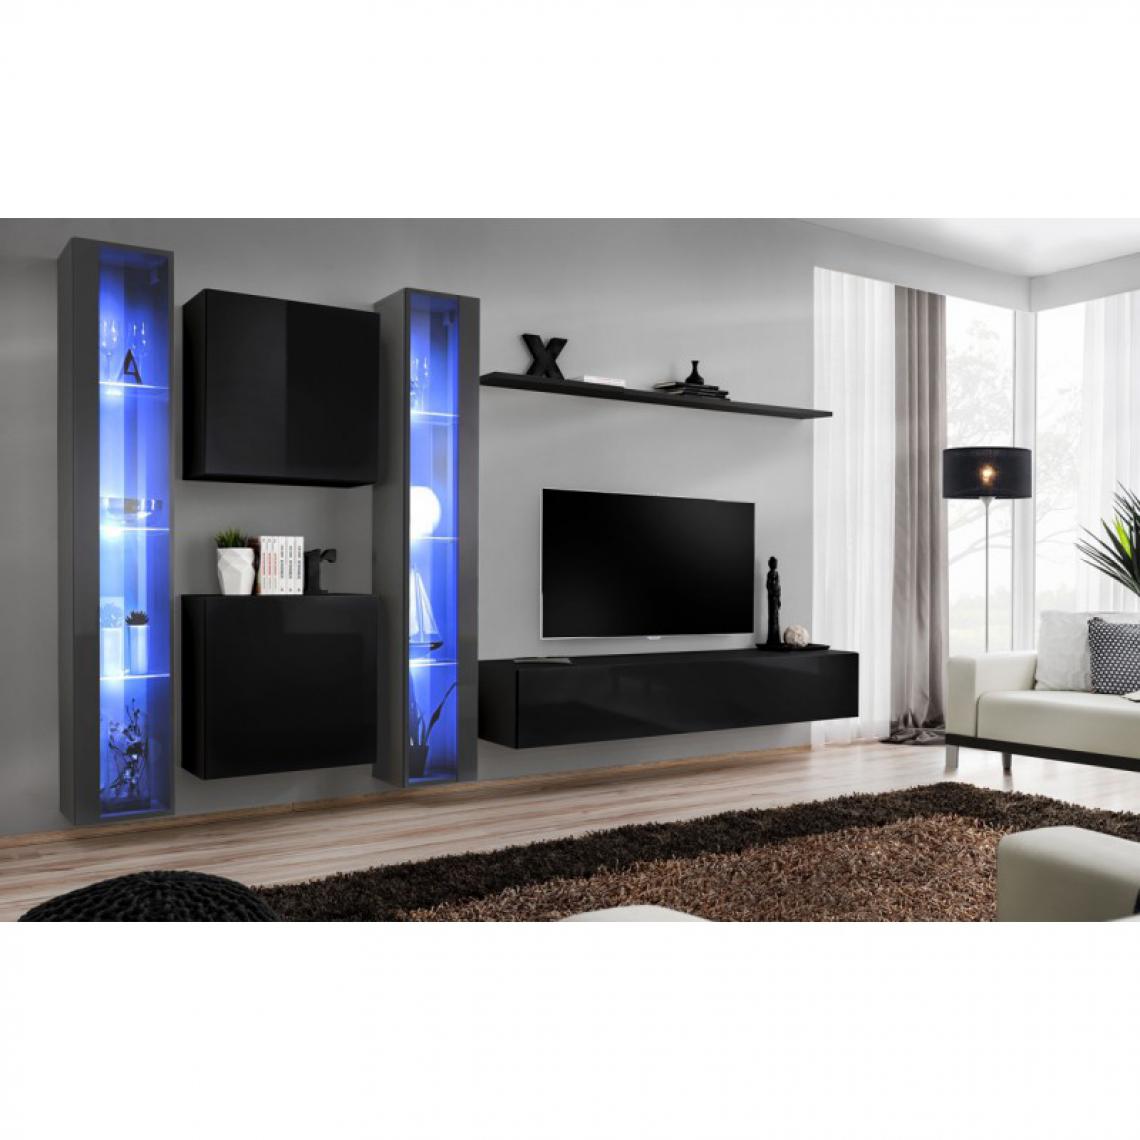 Ac-Deco - Meuble TV Mural Design Switch XVI 330cm Gris & Noir - Meubles TV, Hi-Fi